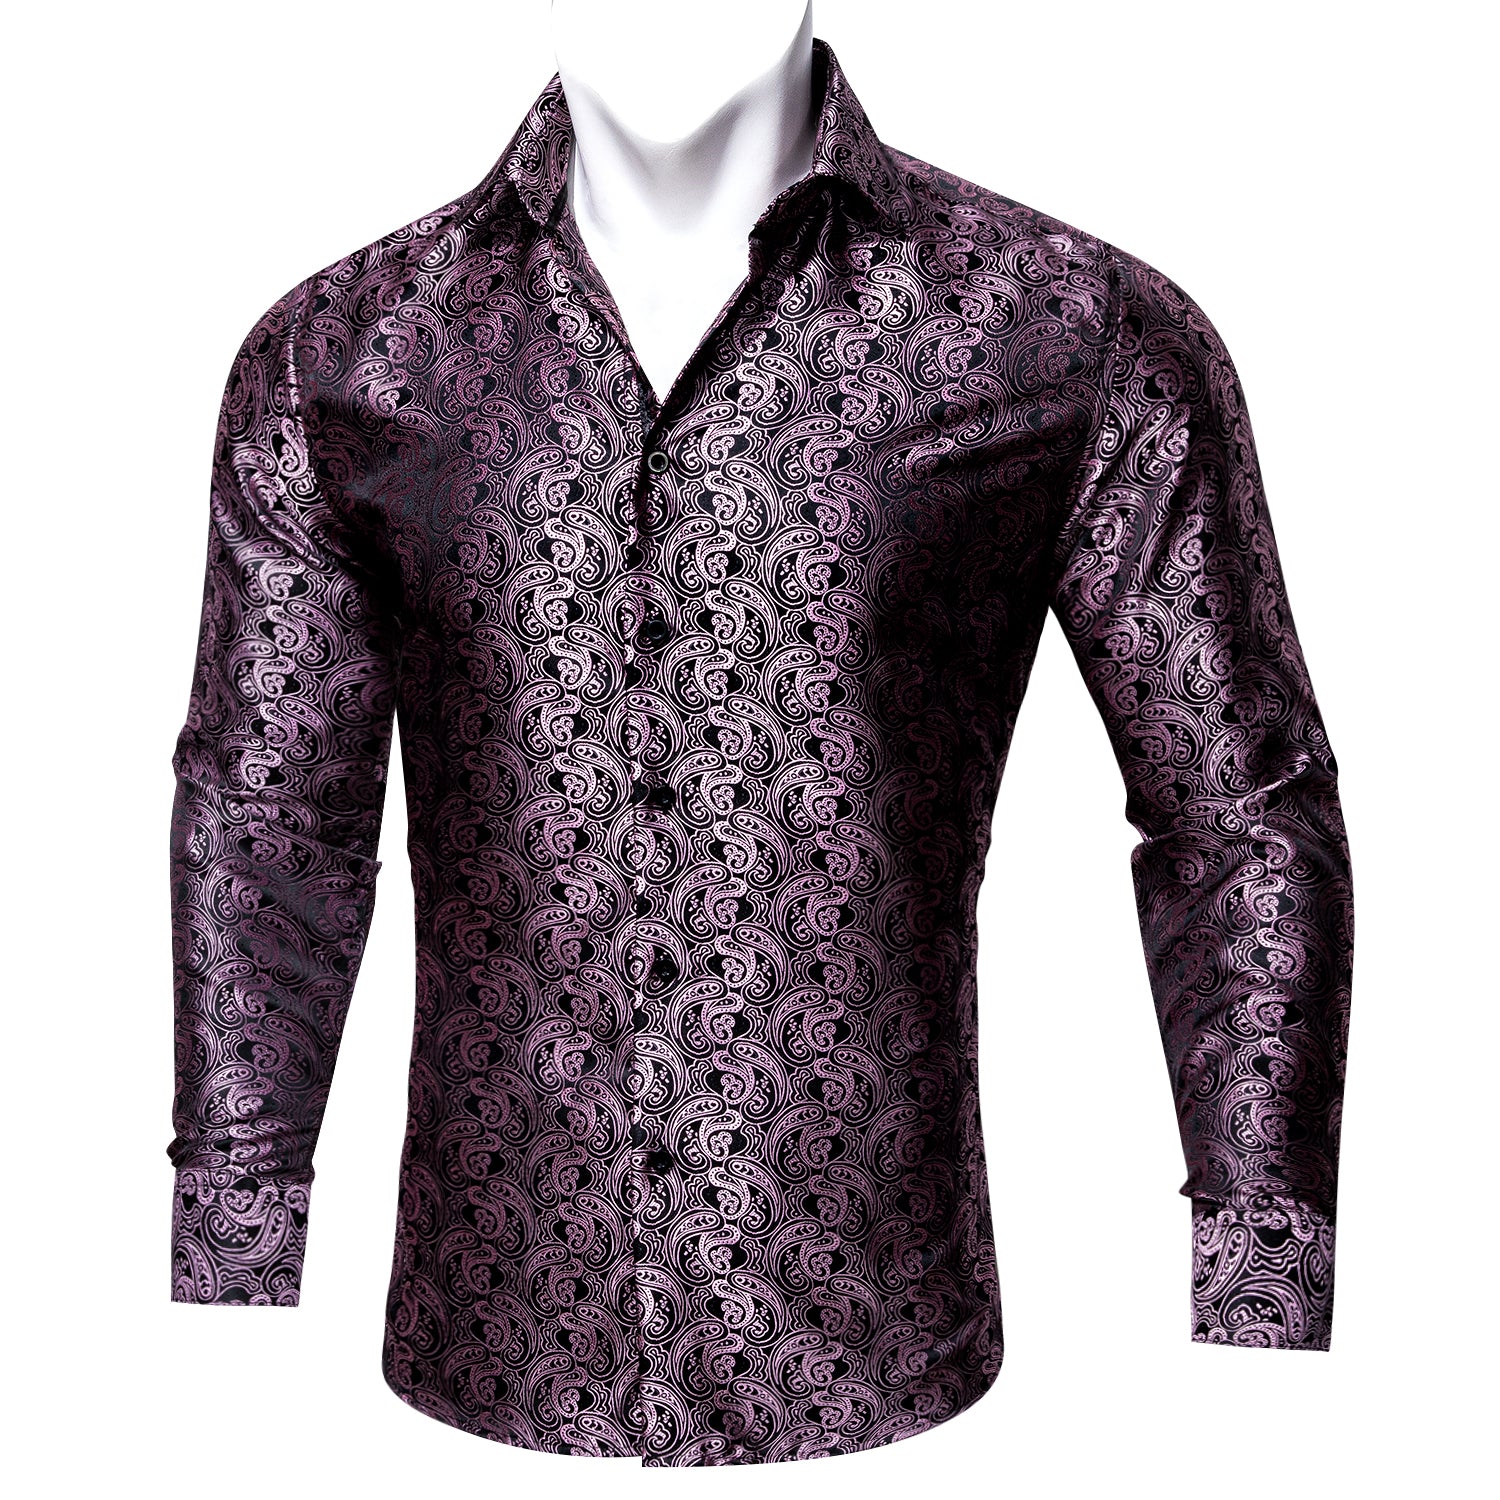 Barry.wang Men's Shirt Black Pink Paisley Silk Long Sleeve Shirt